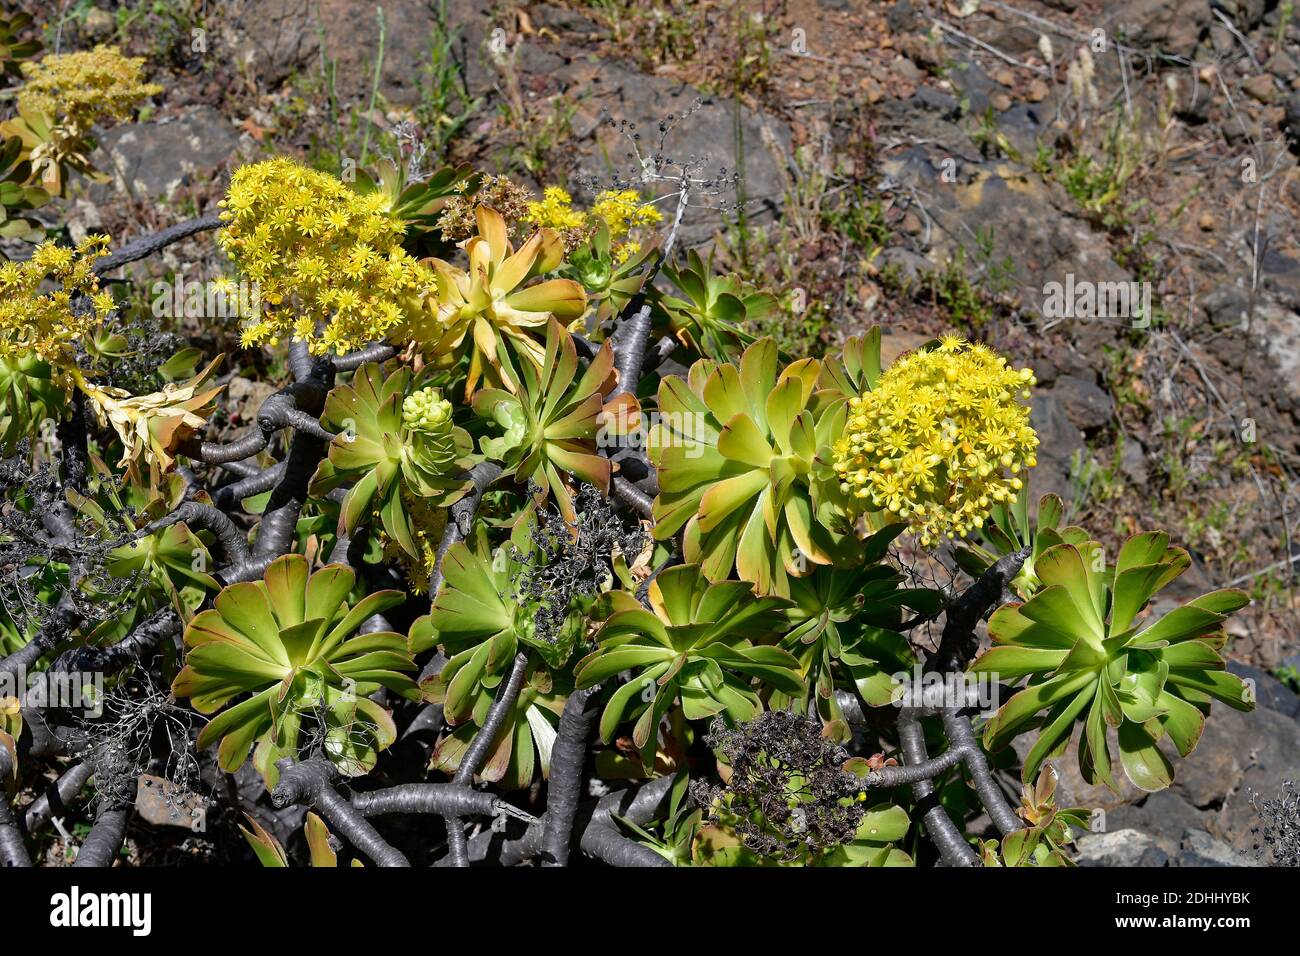 Spain, Canary Islands, Tenerife, tree aenium aka Irish Rose Stock Photo